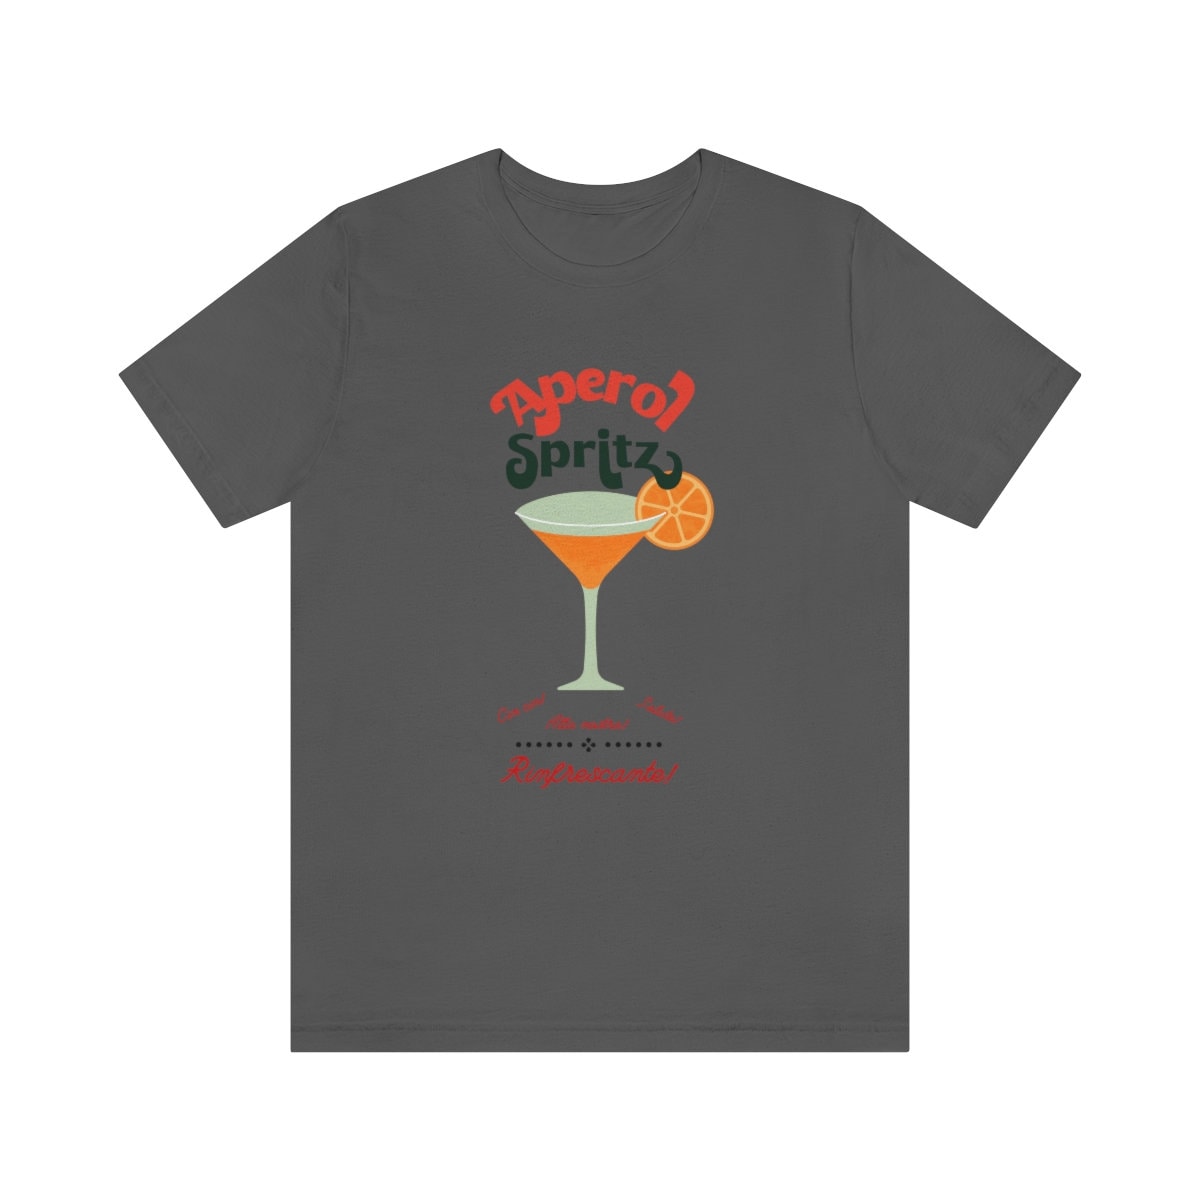 Discover Aperol Spritz Tee, Italian drink t shirt, cocktail tee